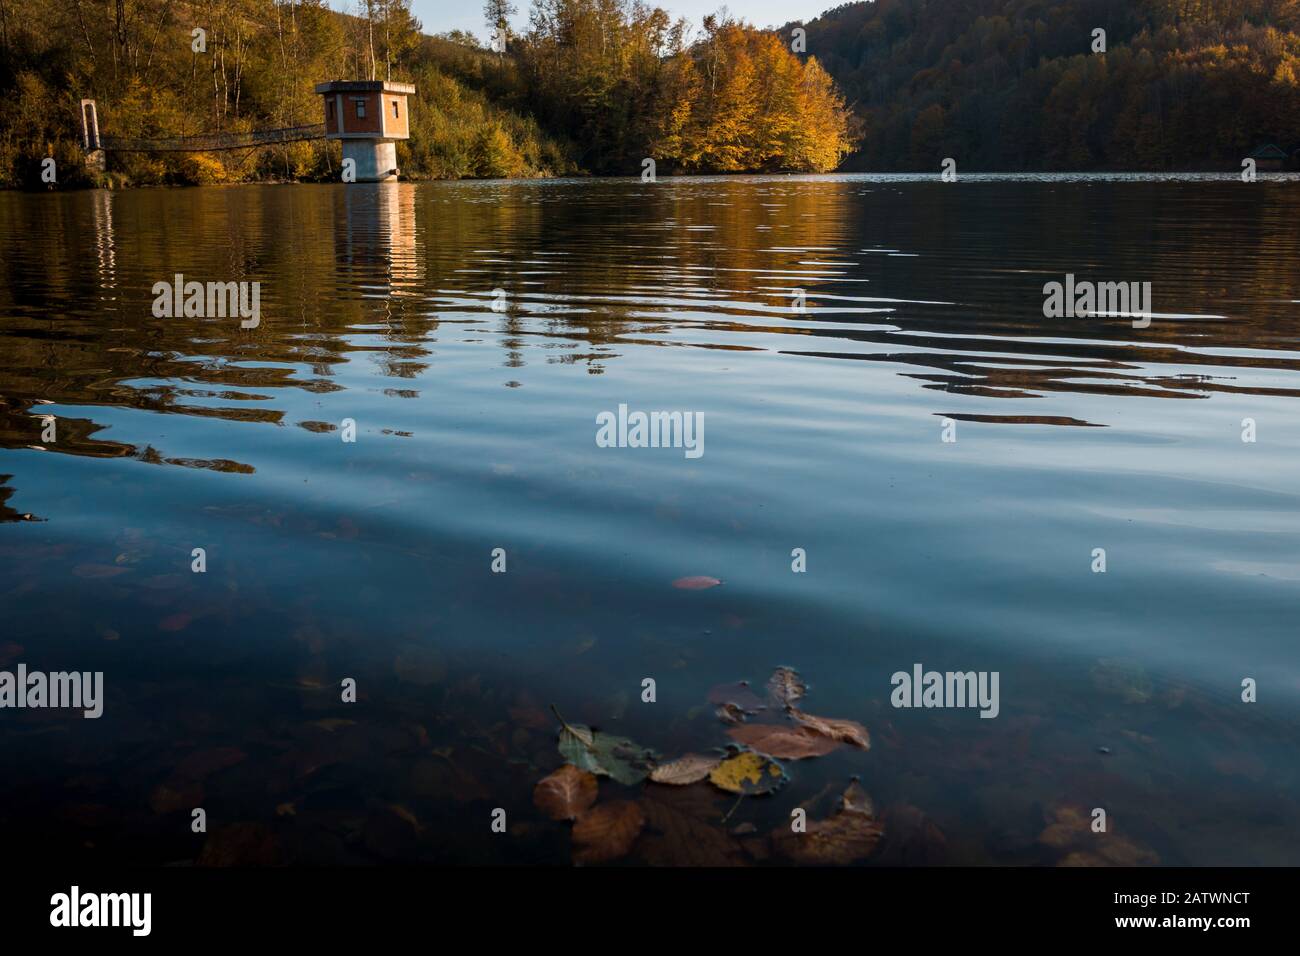 Man made lake in Serbia Stock Photo